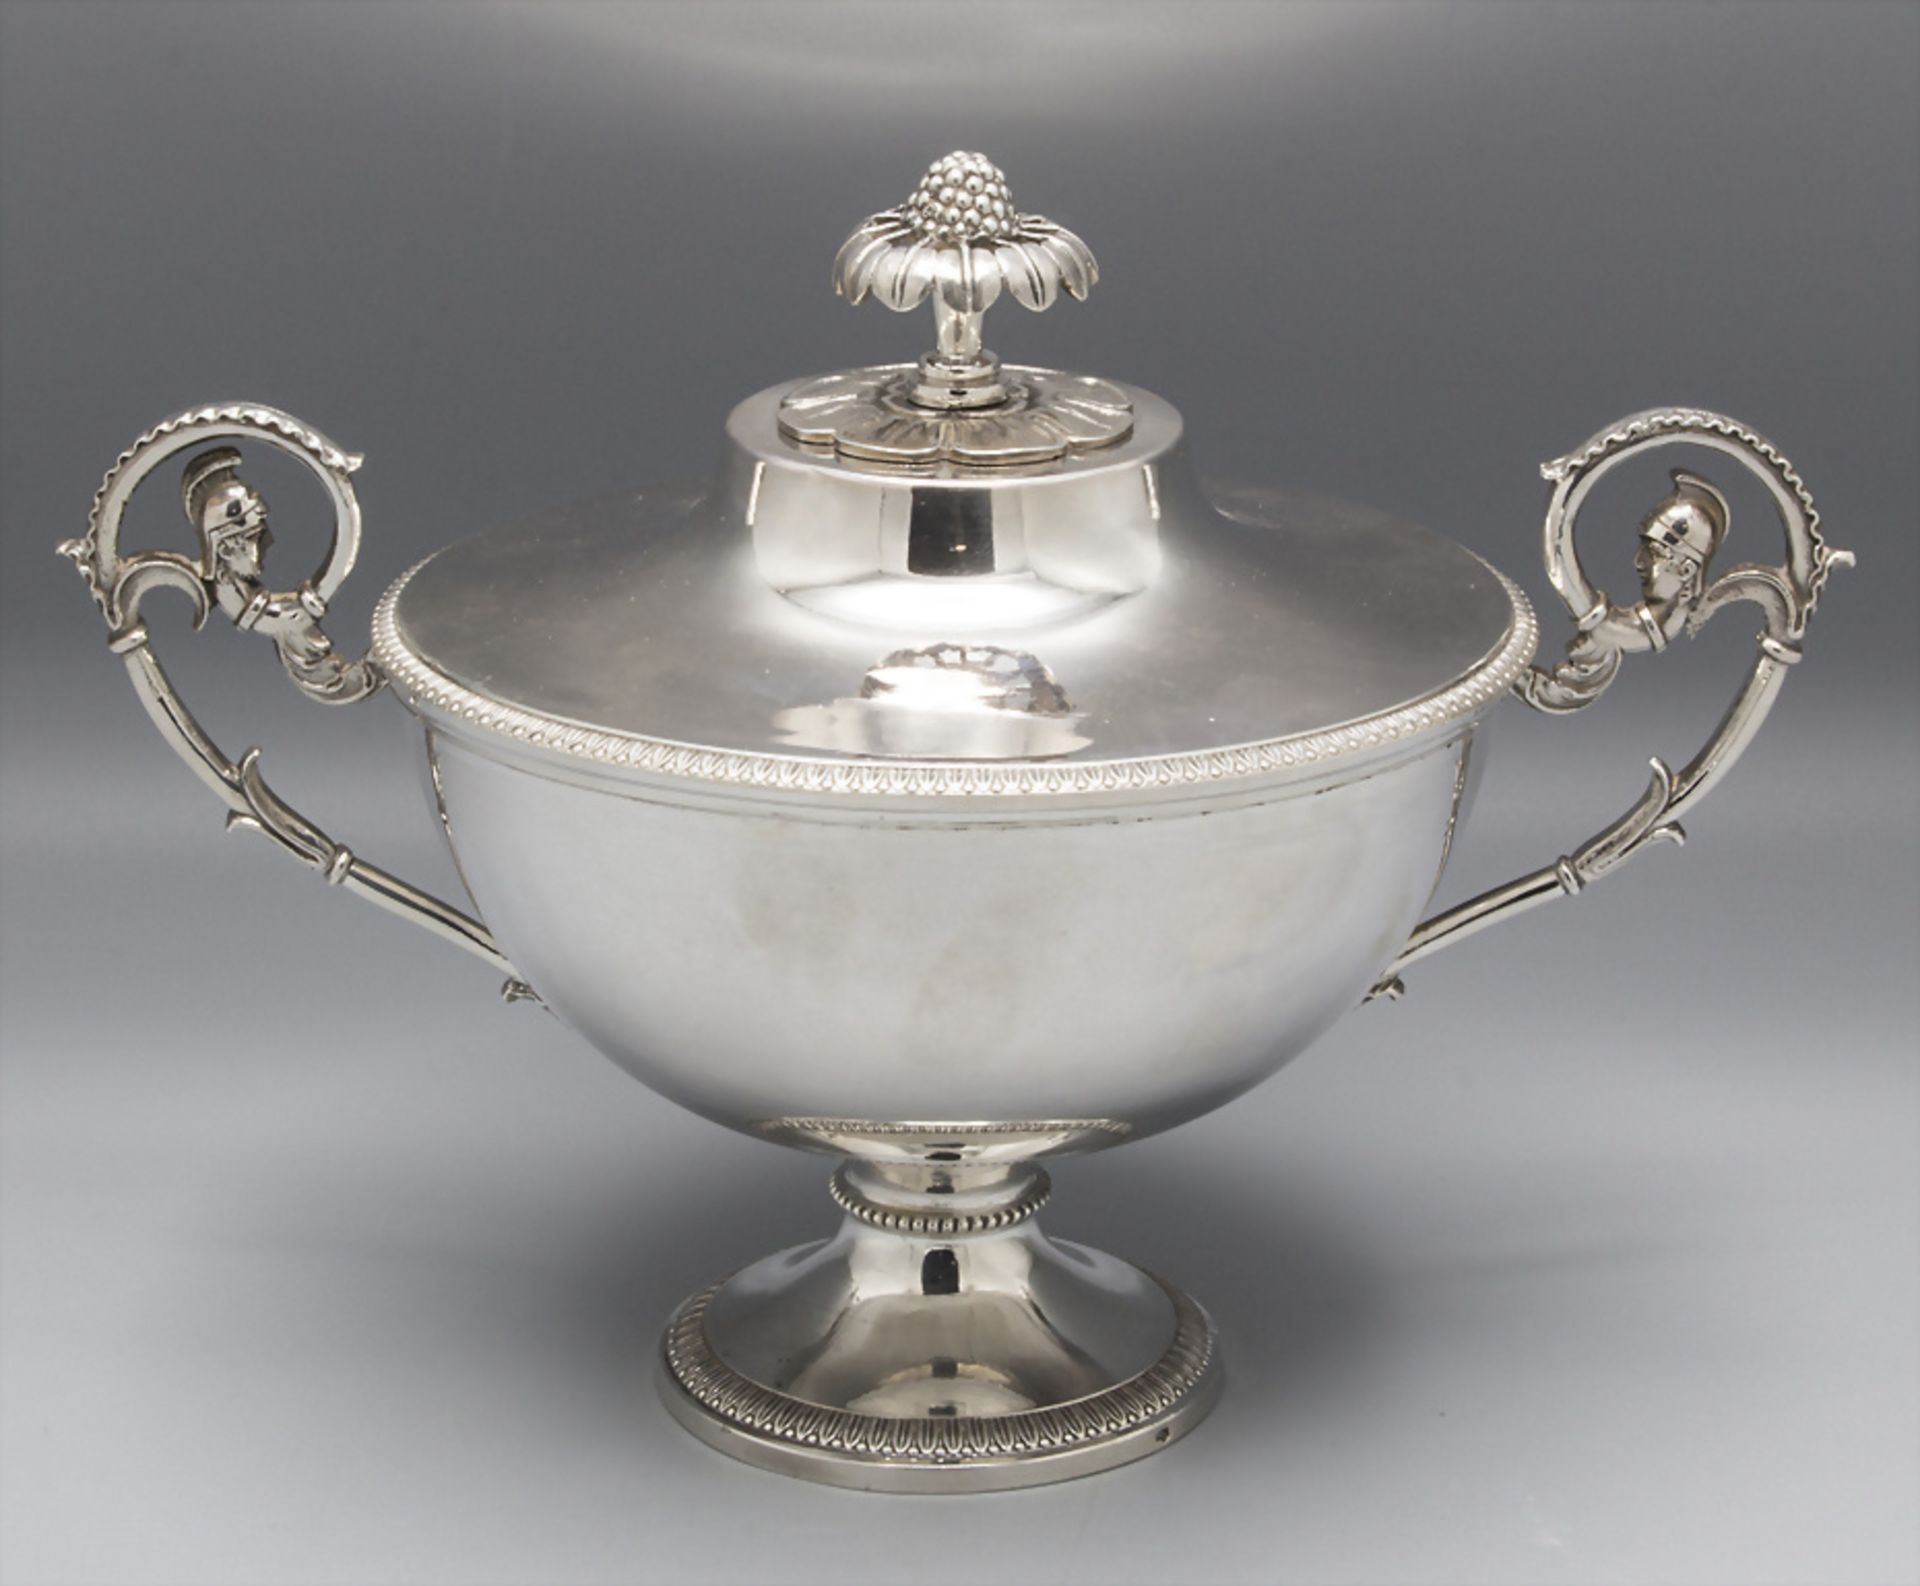 Zuckerdose Epoche Restauration / A silver sugar bowl, Charles-Marie Guidée, Paris, nach 1819